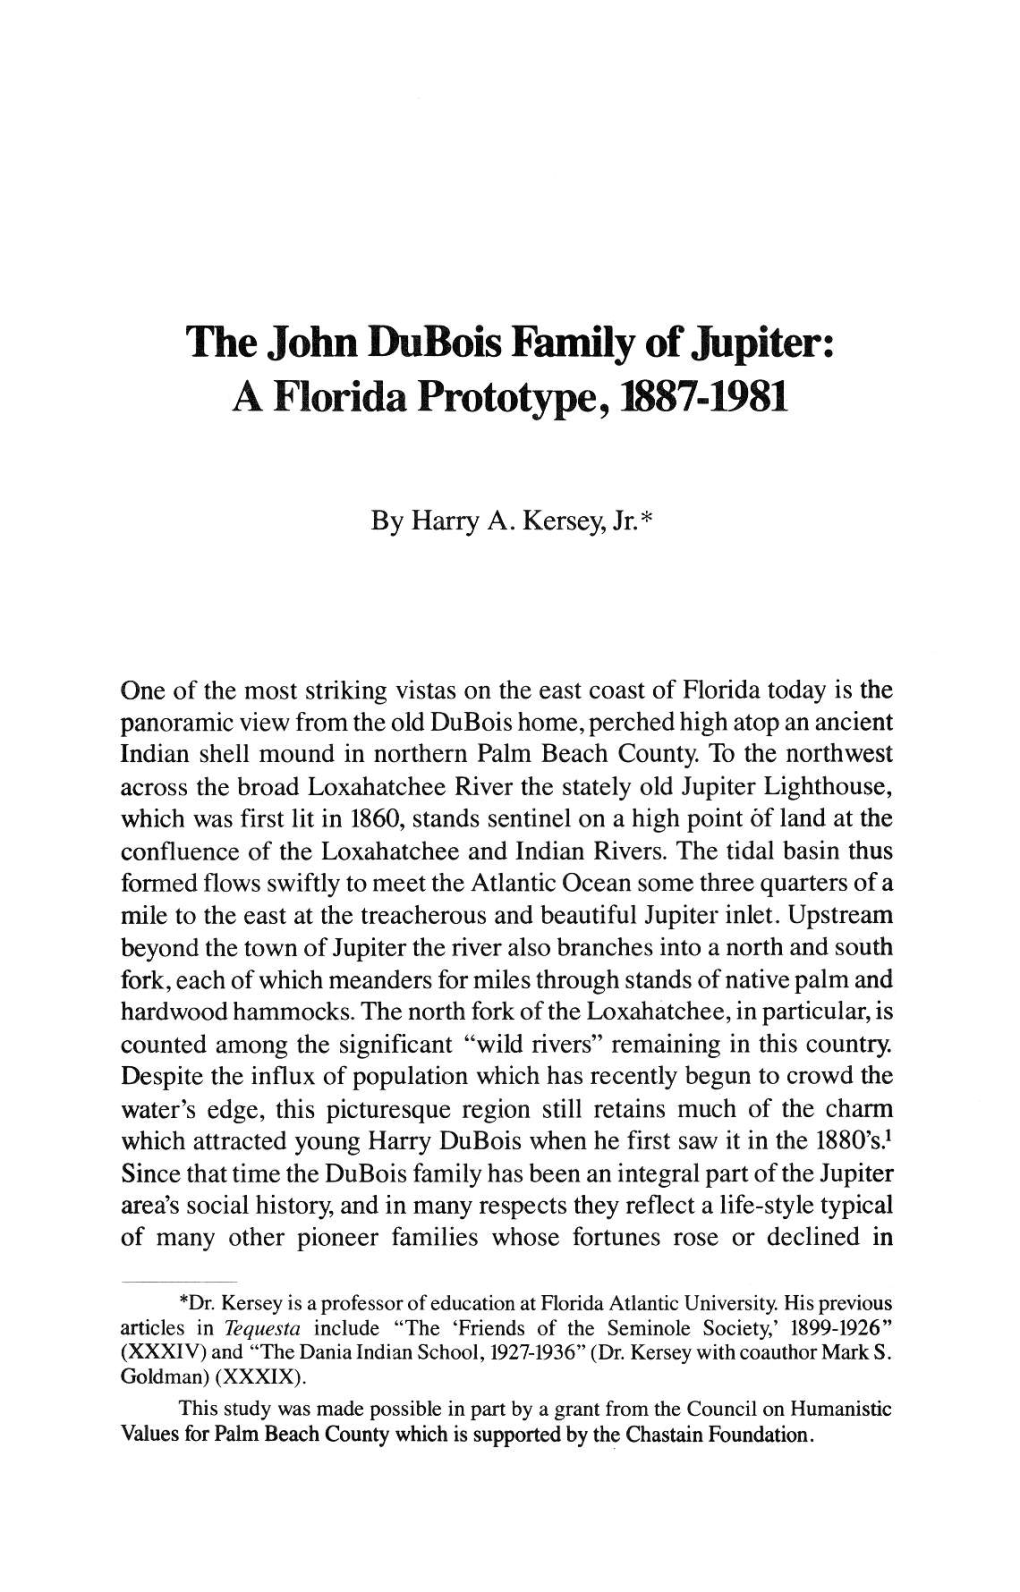 The John Dubois Family of Jupiter: a Florida Prototype, 1887-1981